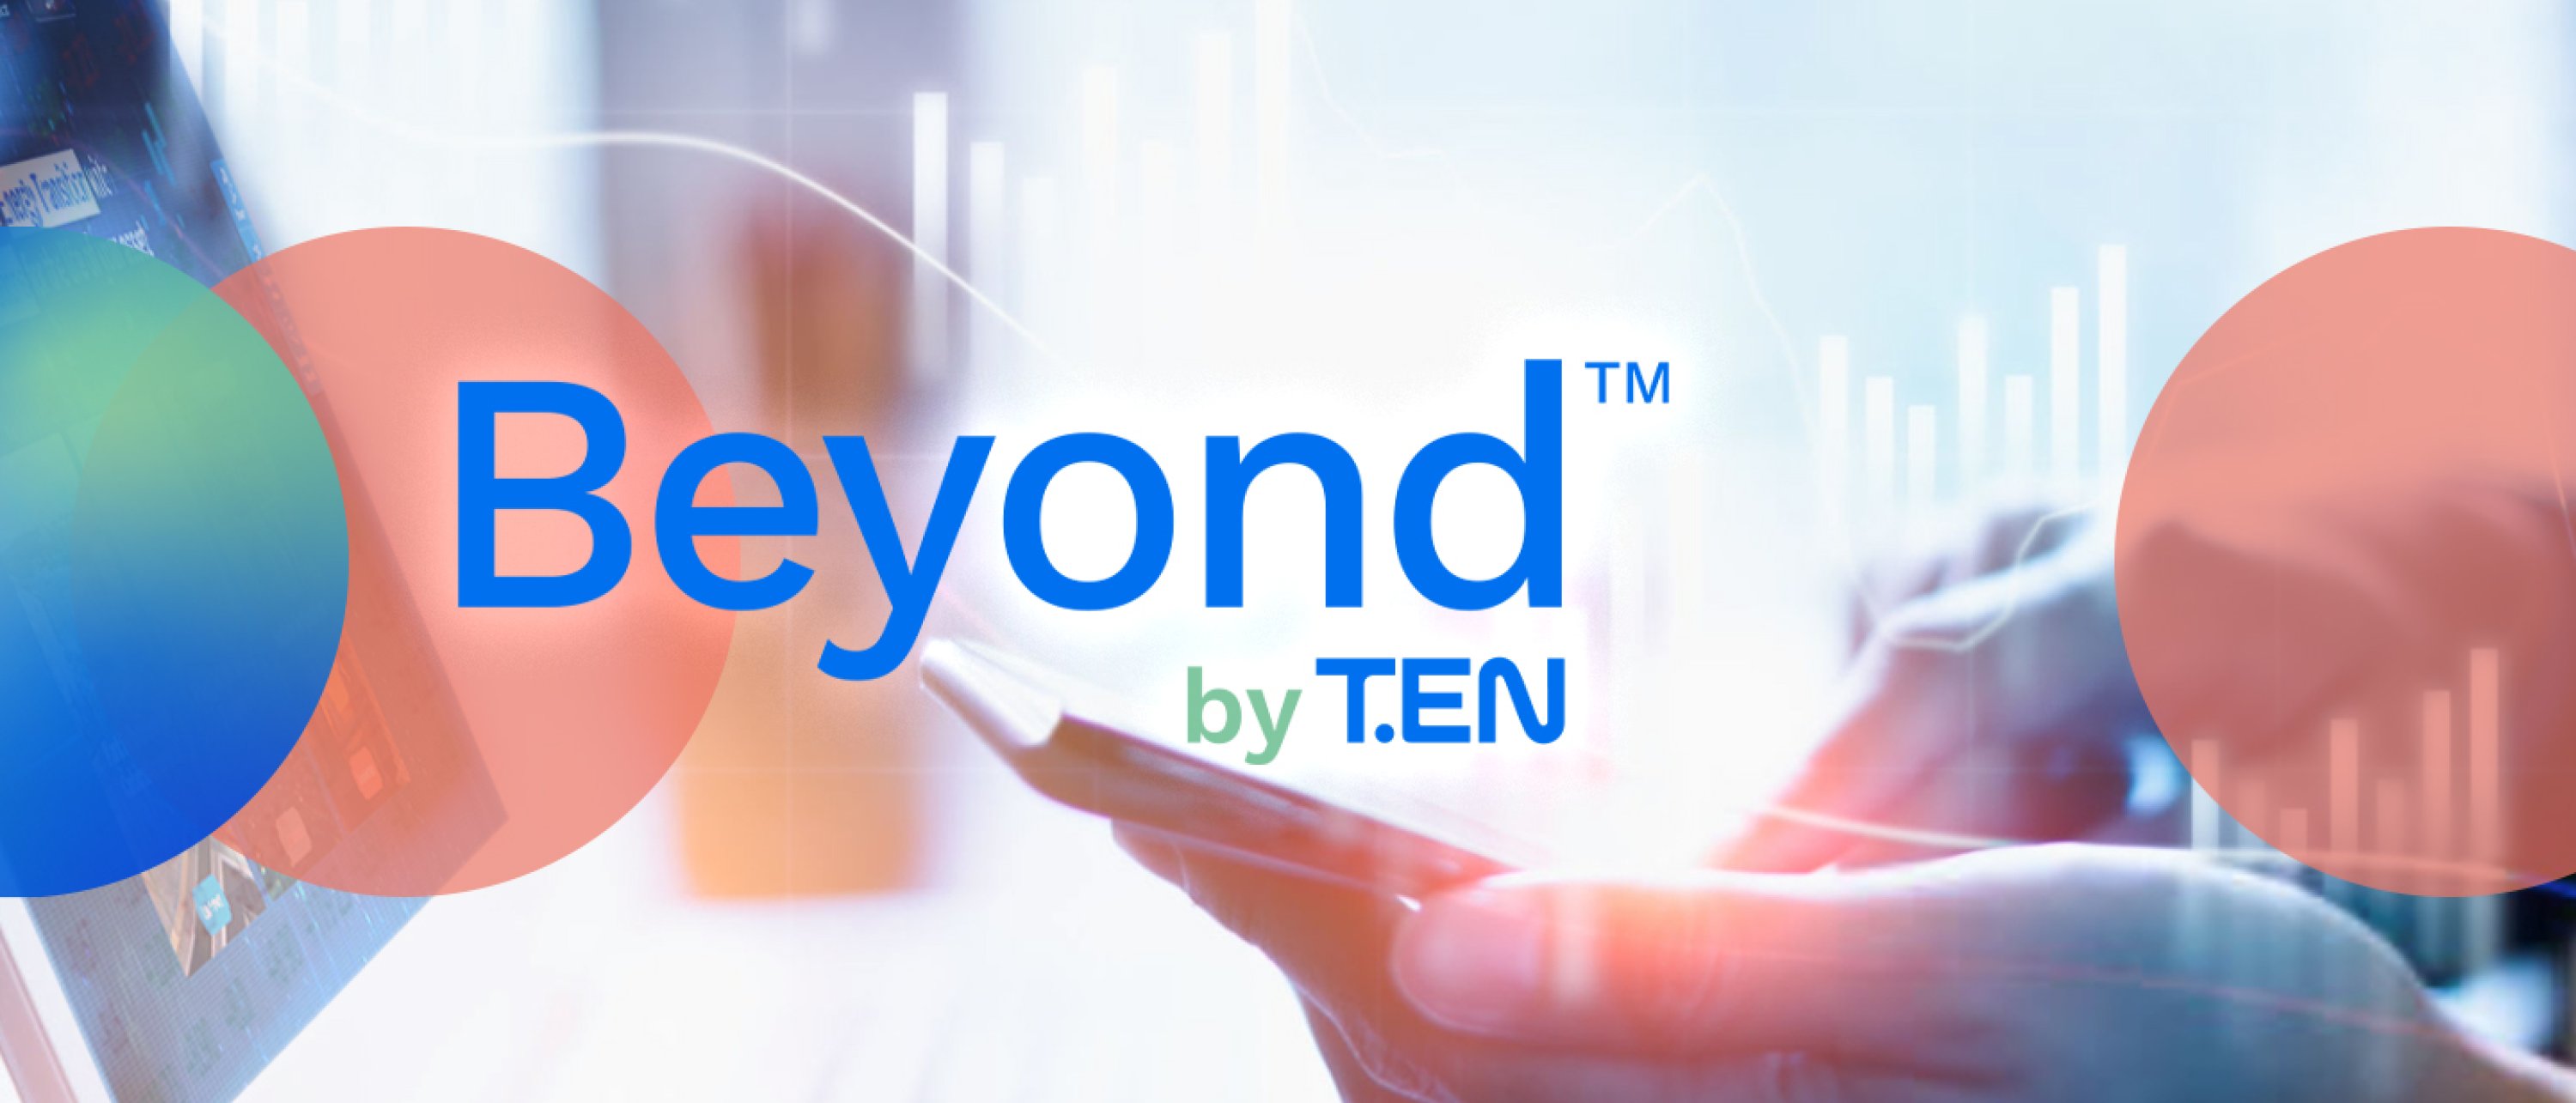 Beyond by T.EN banner image